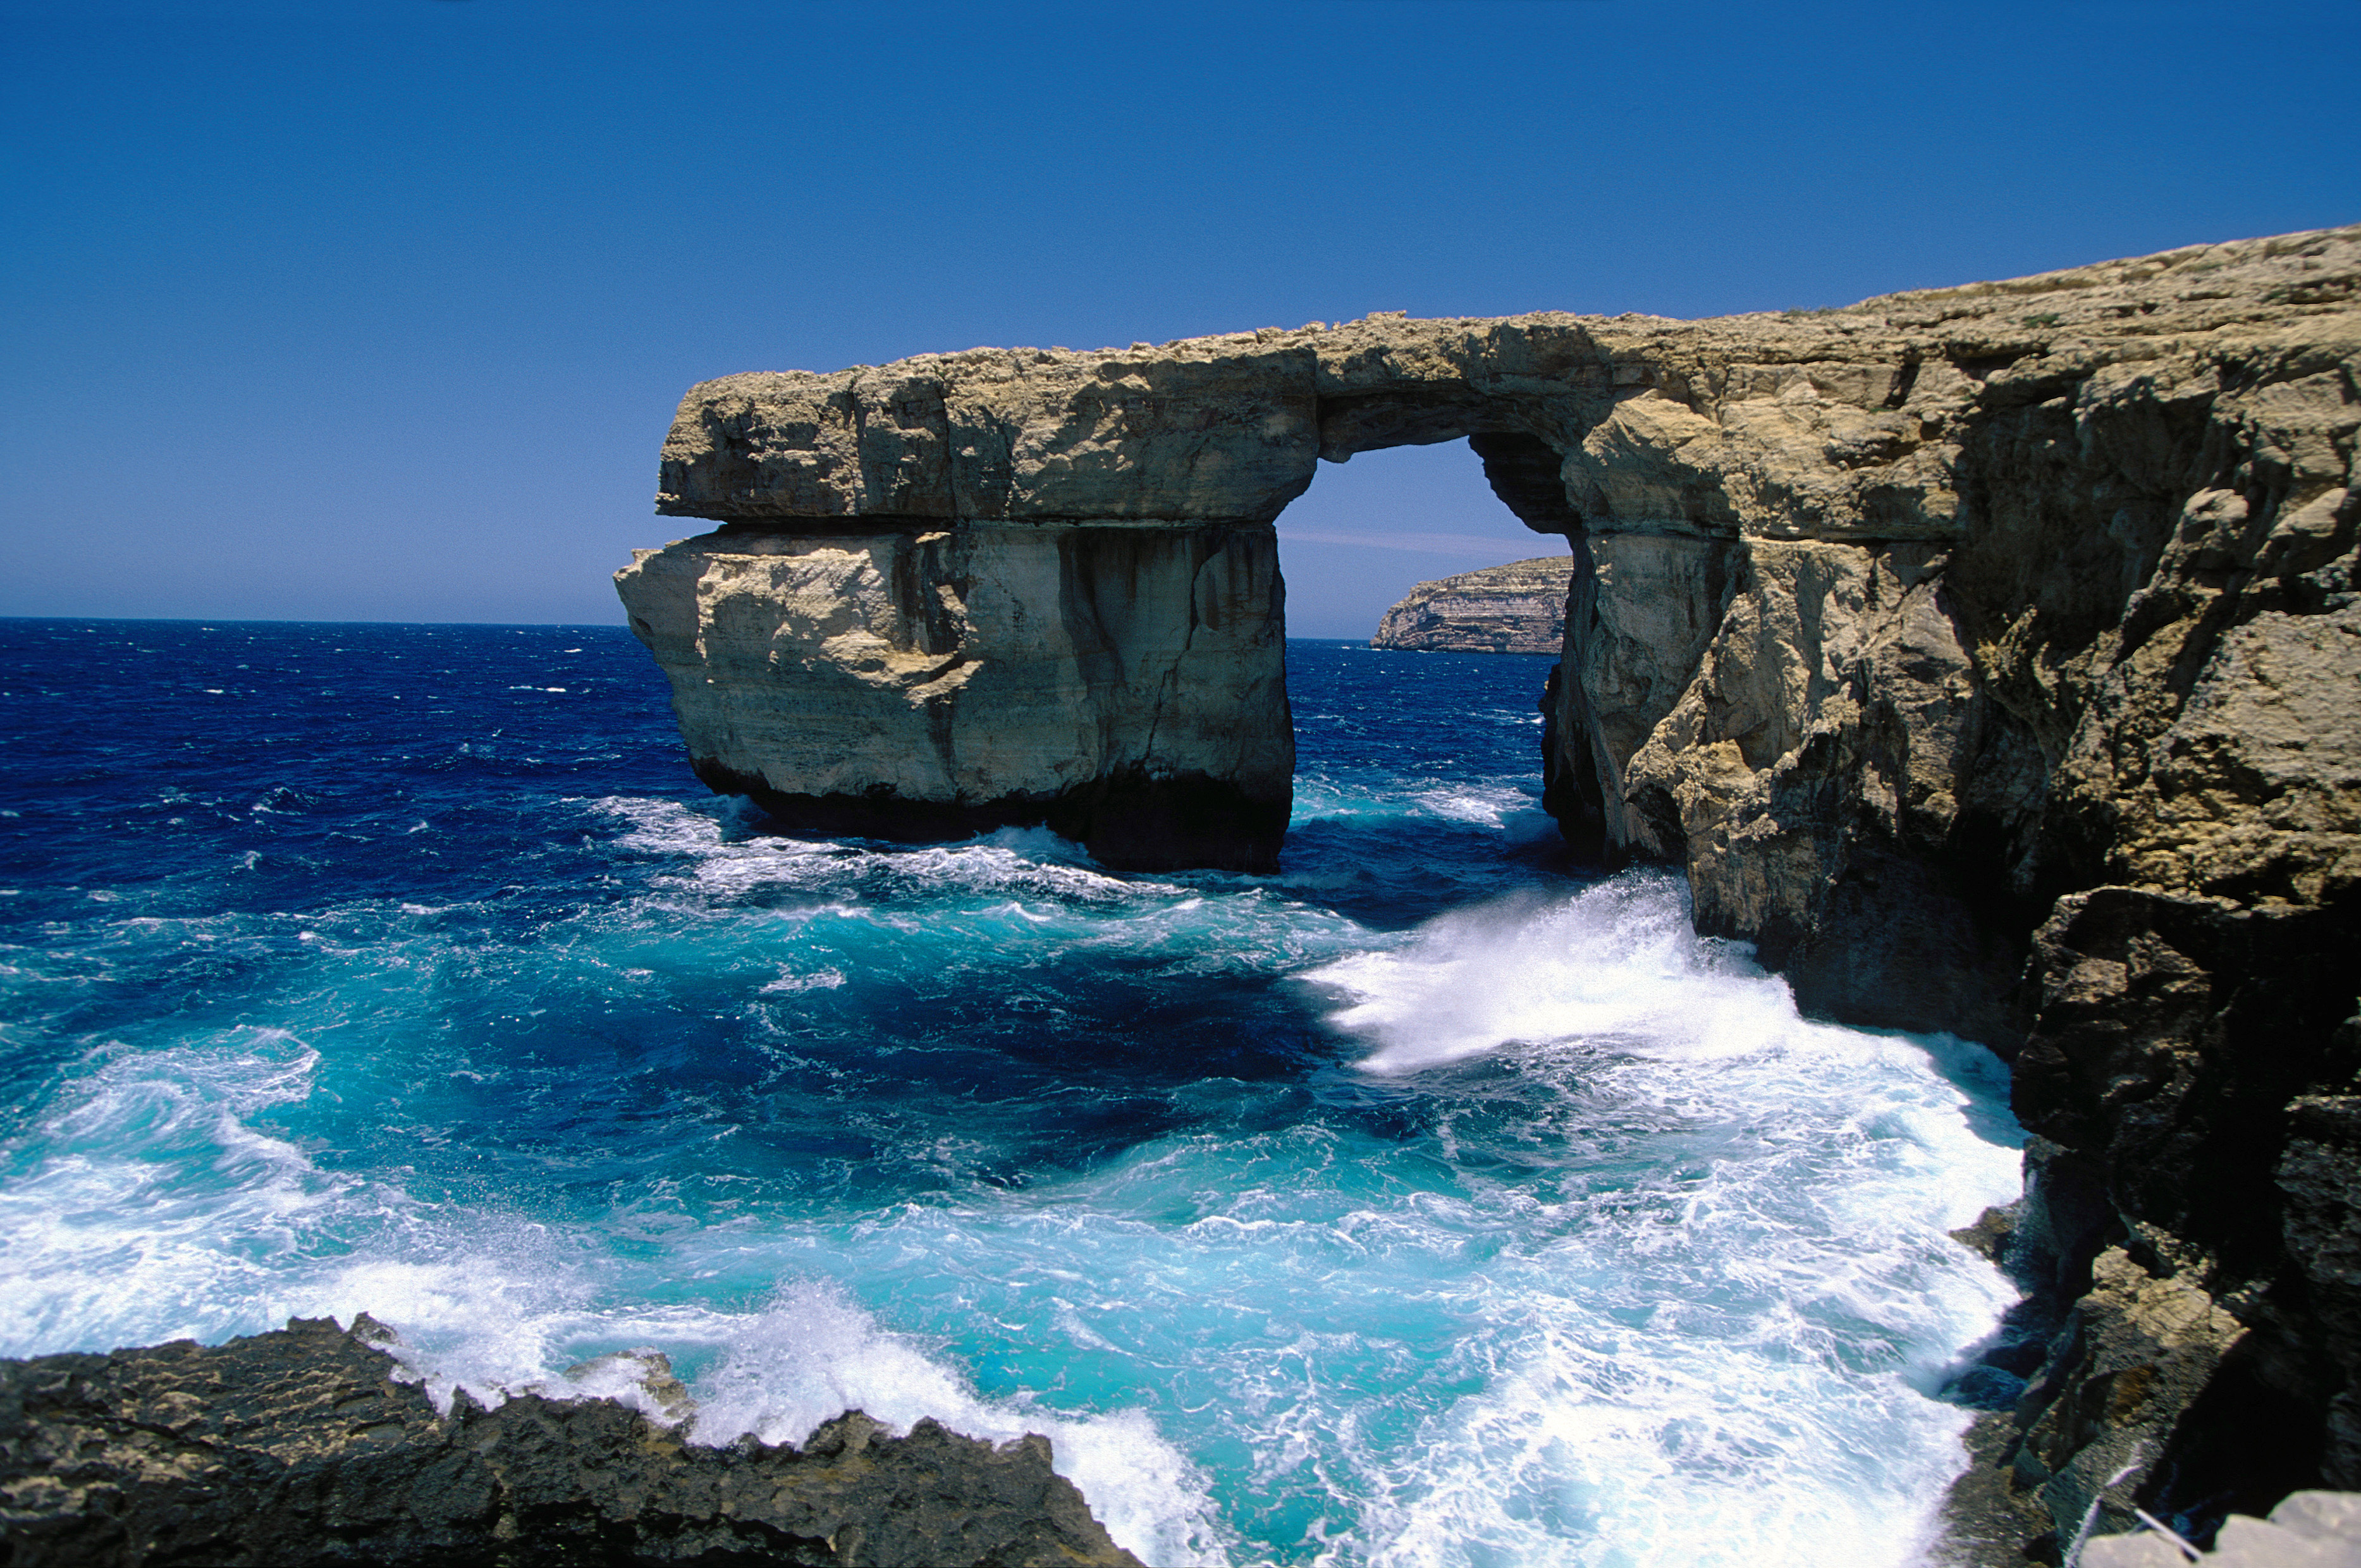 Malta's dramatic coastline